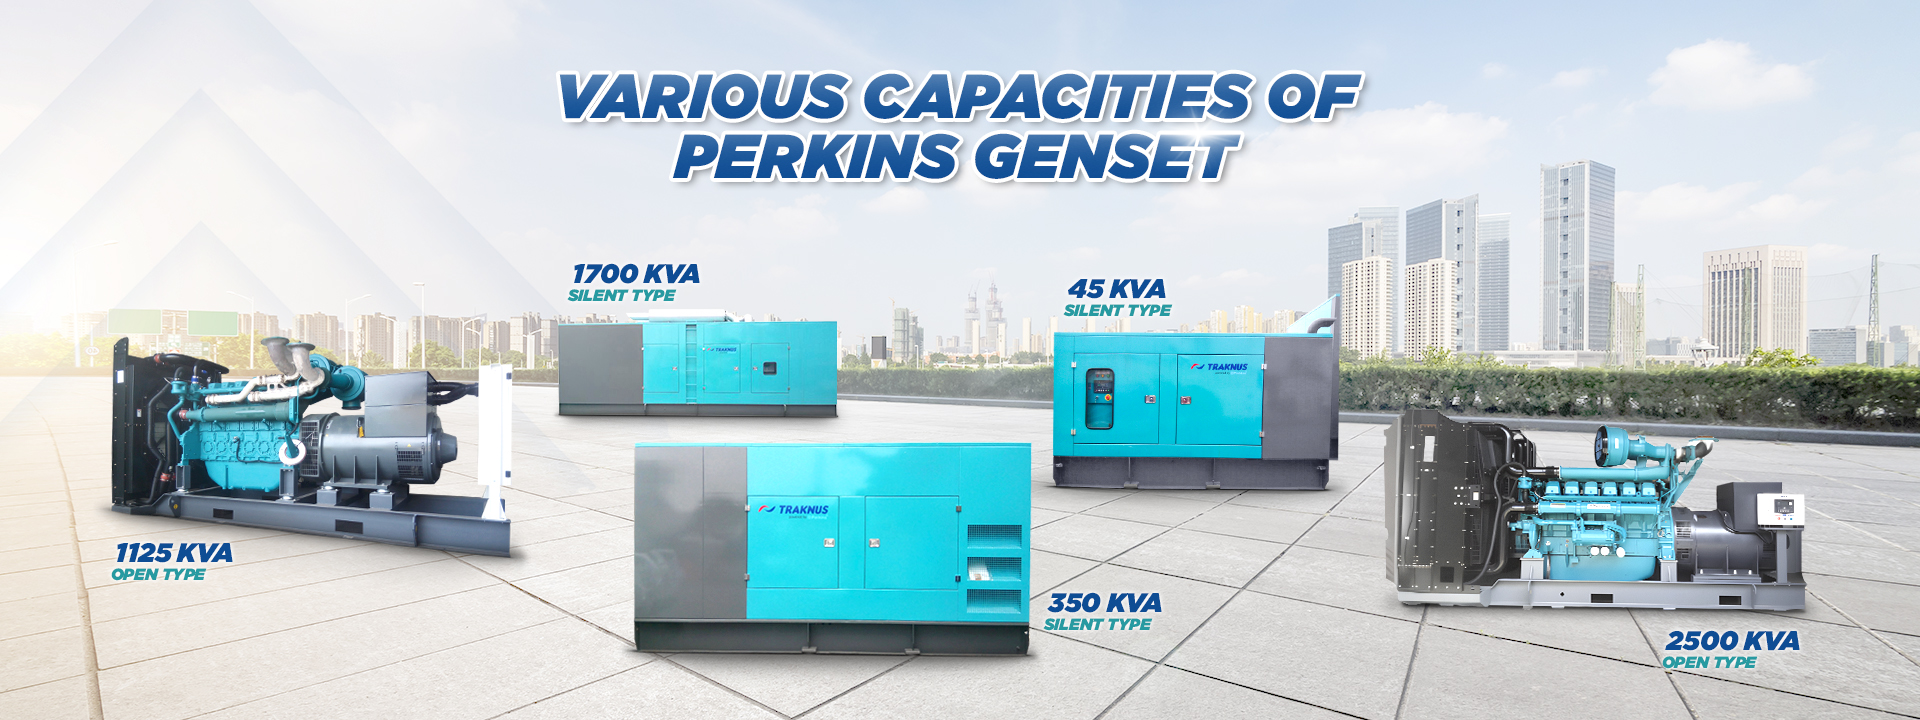 Various capacities of perkins genset